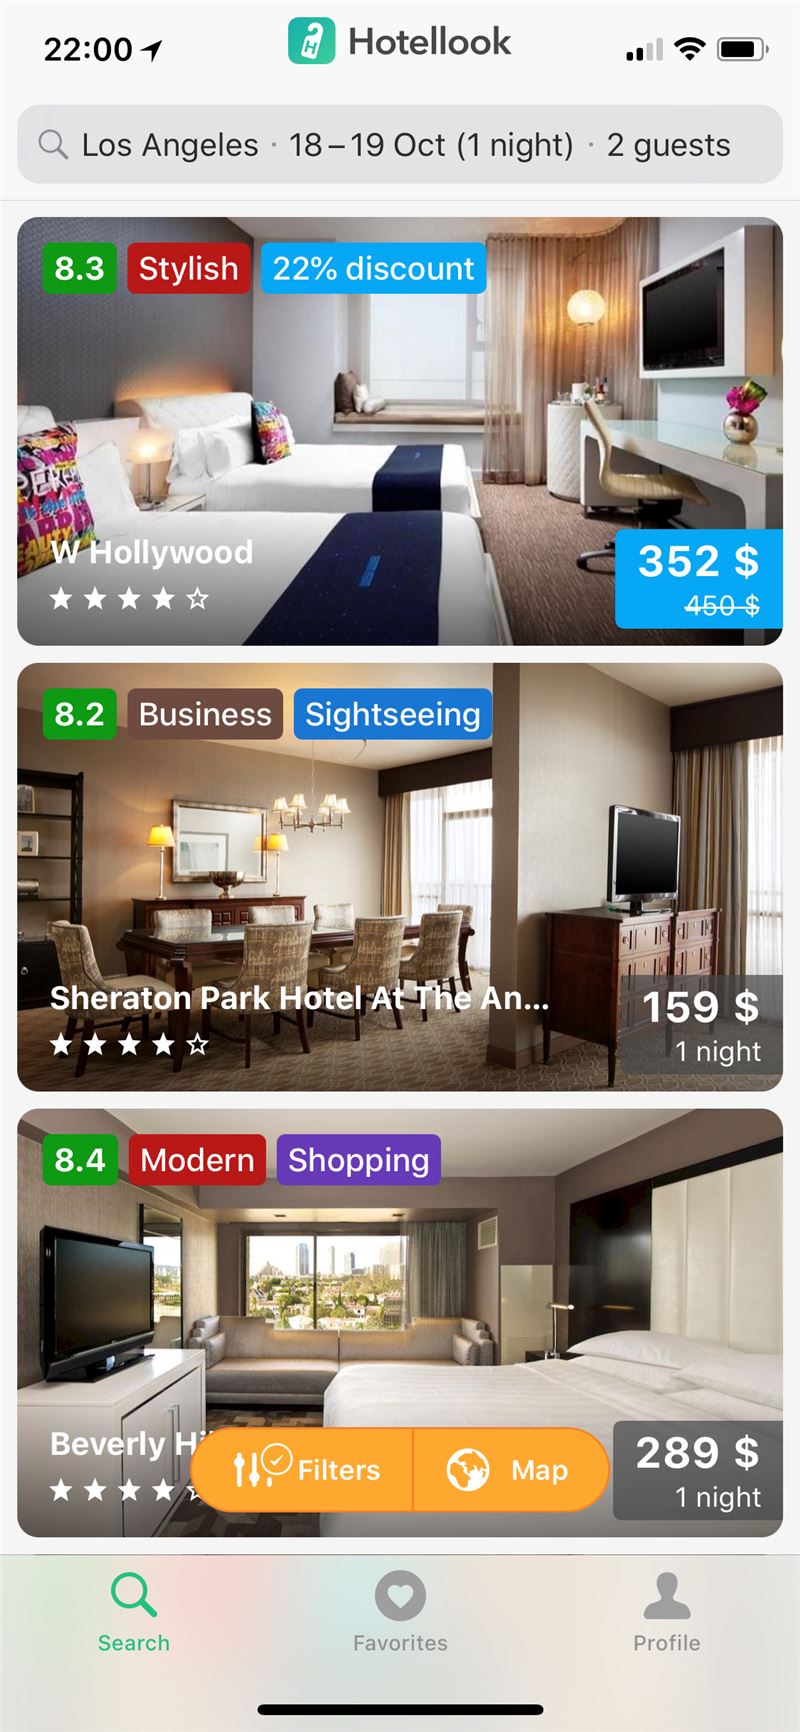 Hotellook Mobile App | The Best Mobile App Awards